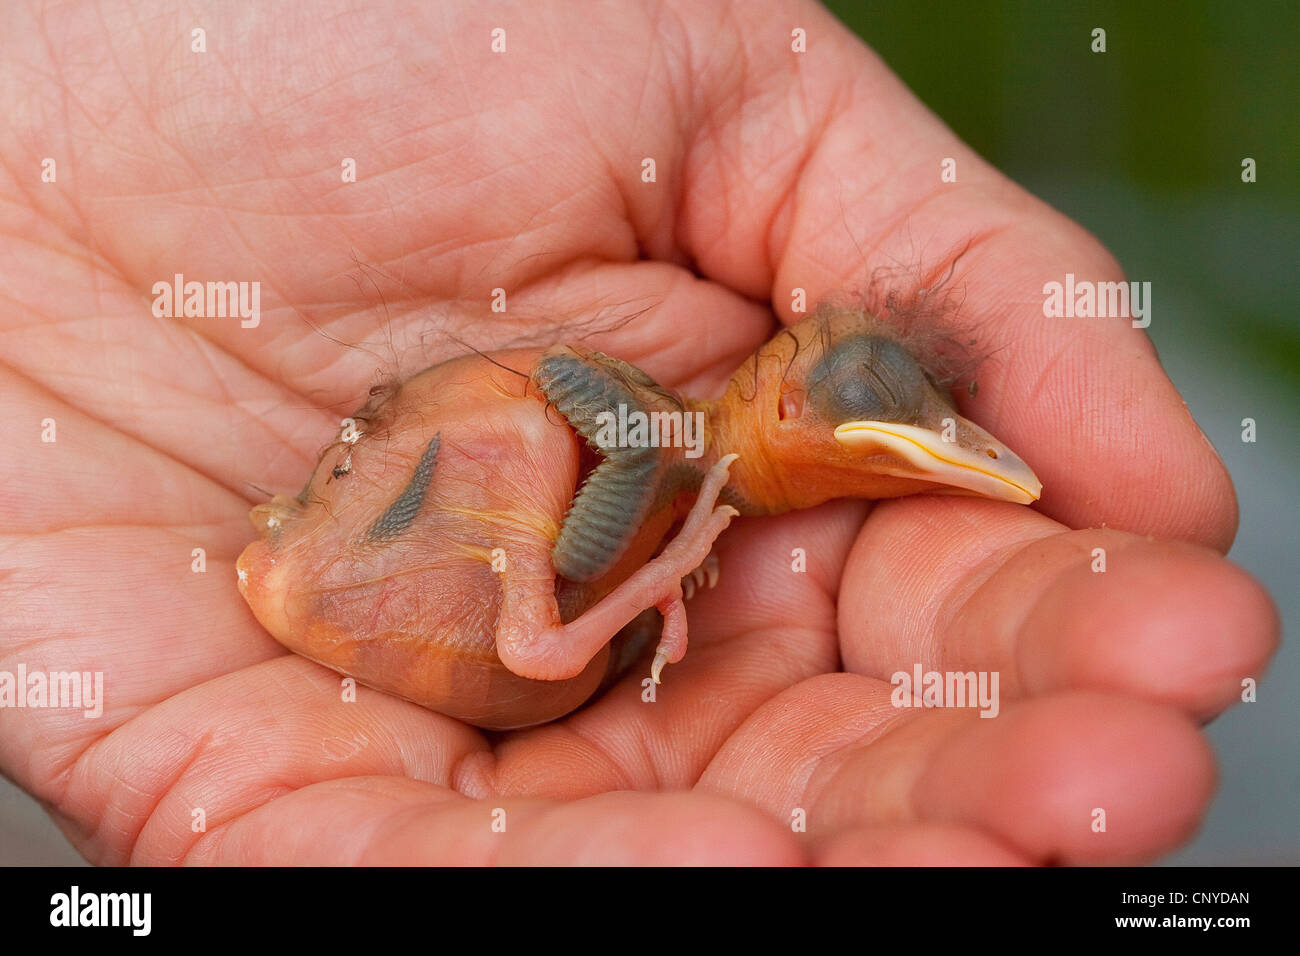 blackbird (Turdus merula), still bald orphaned chicken is lying in a hand sleeping Stock Photo